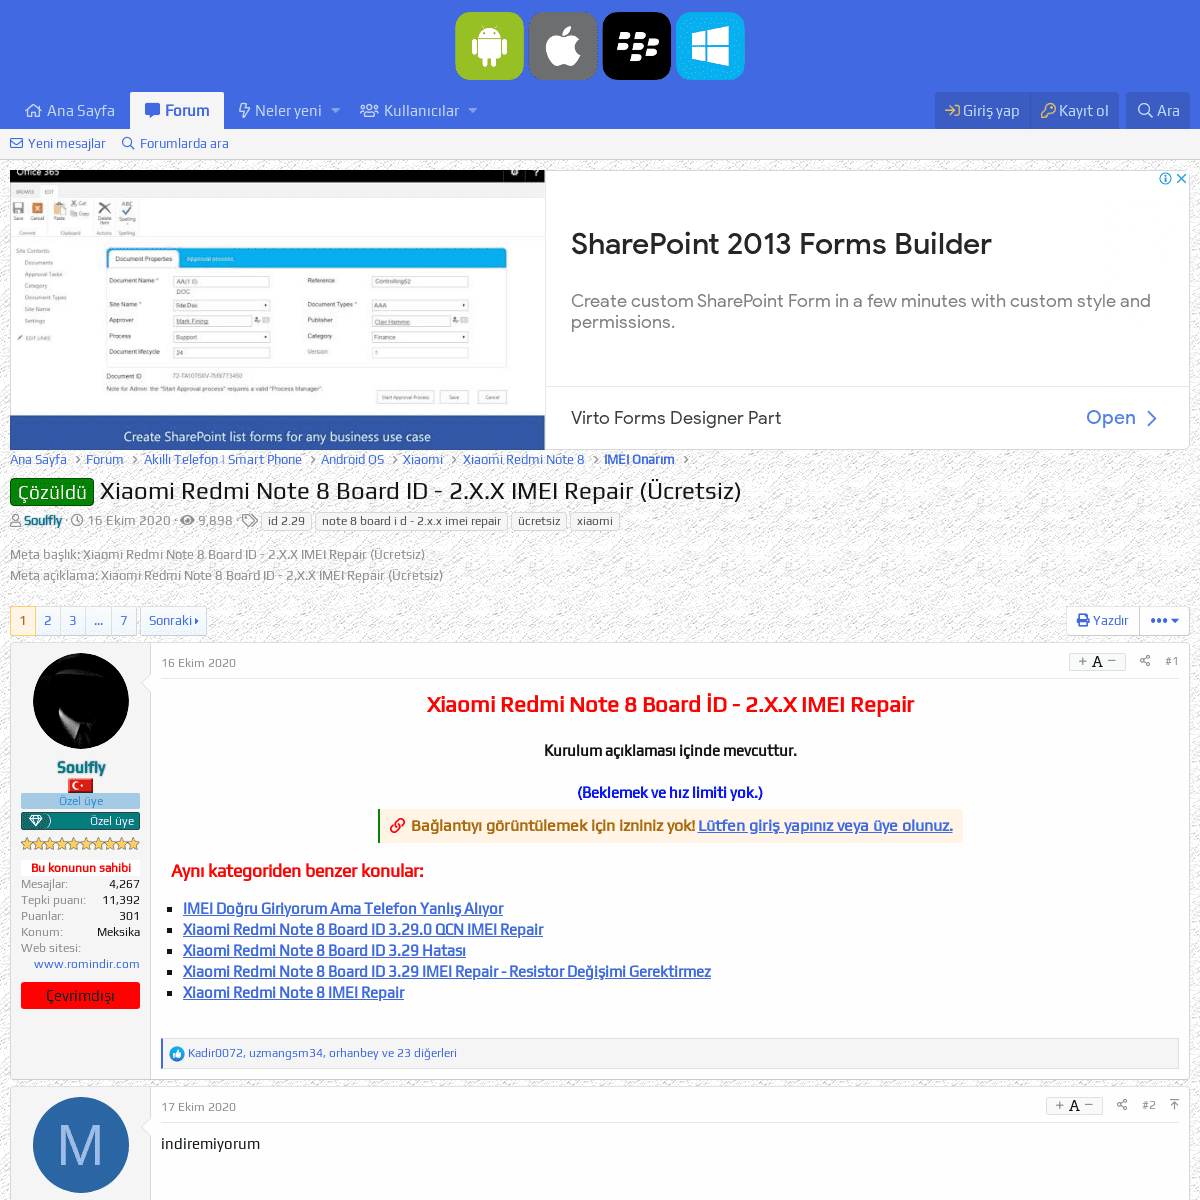 A complete backup of https://www.mobilkulup.com/threads/xiaomi-redmi-note-8-board-id-2-x-x-imei-repair-ucretsiz.10656/